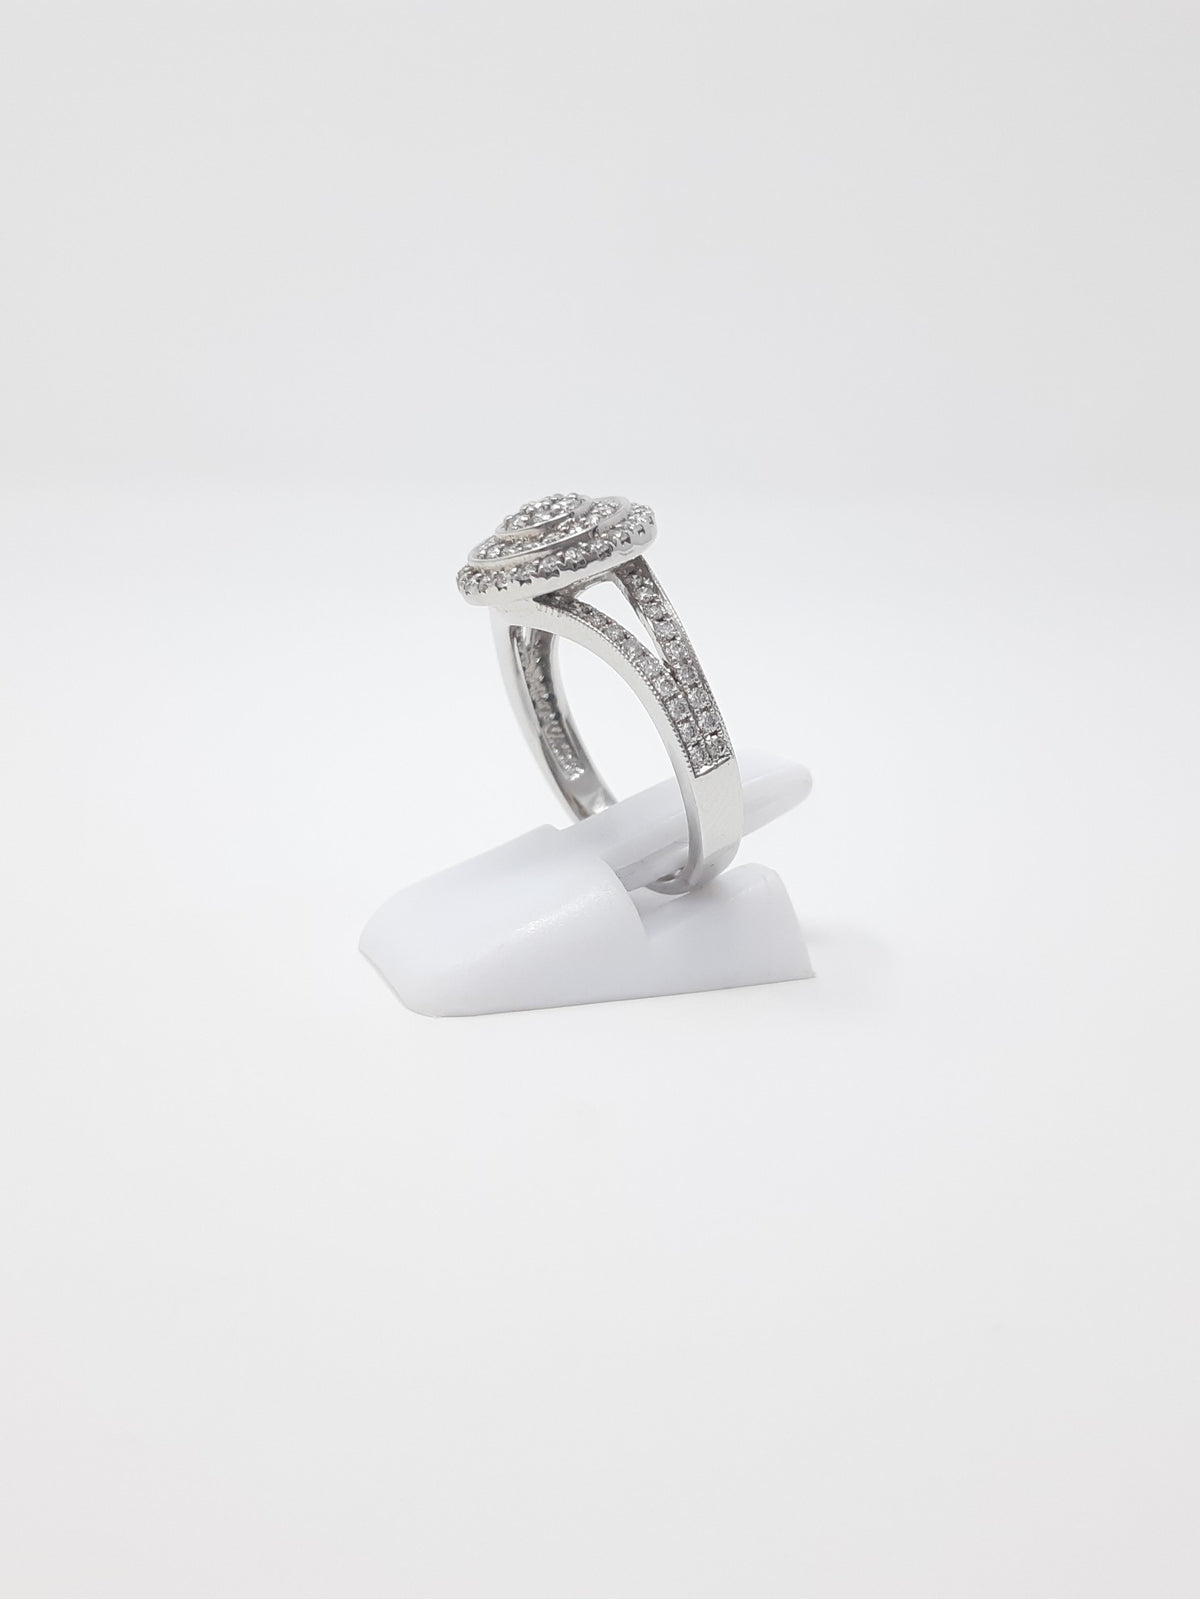 14K White Gold 0.66cttw Diamond Halo Engagement Ring, size 6.5